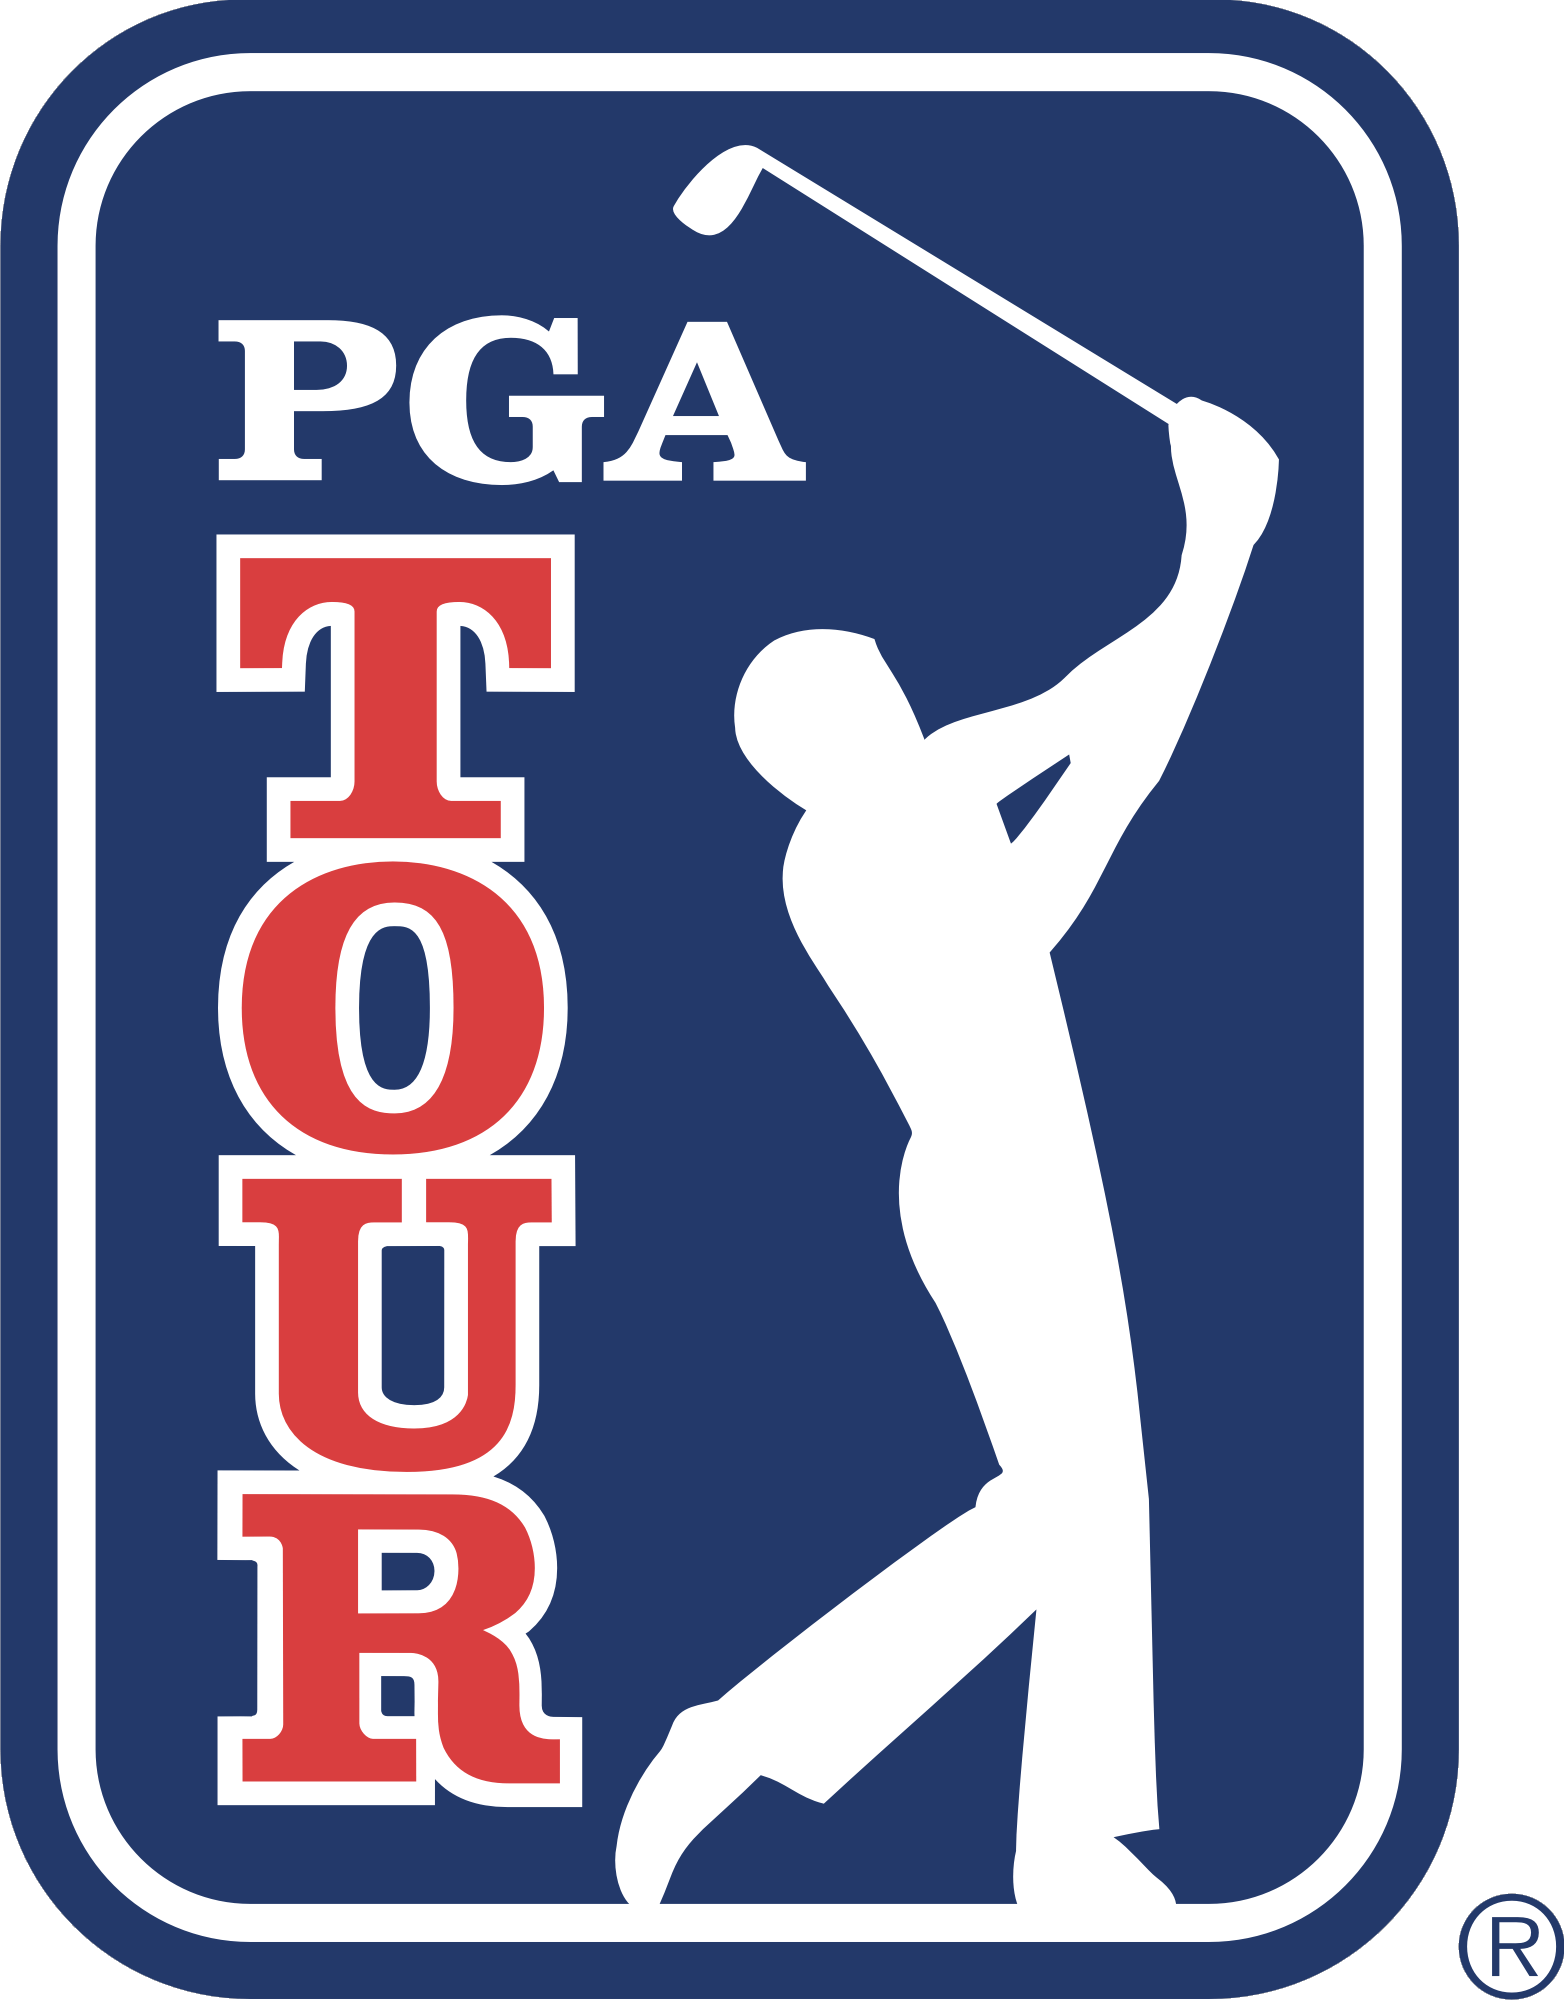 A blue and white logo of the pga tour.